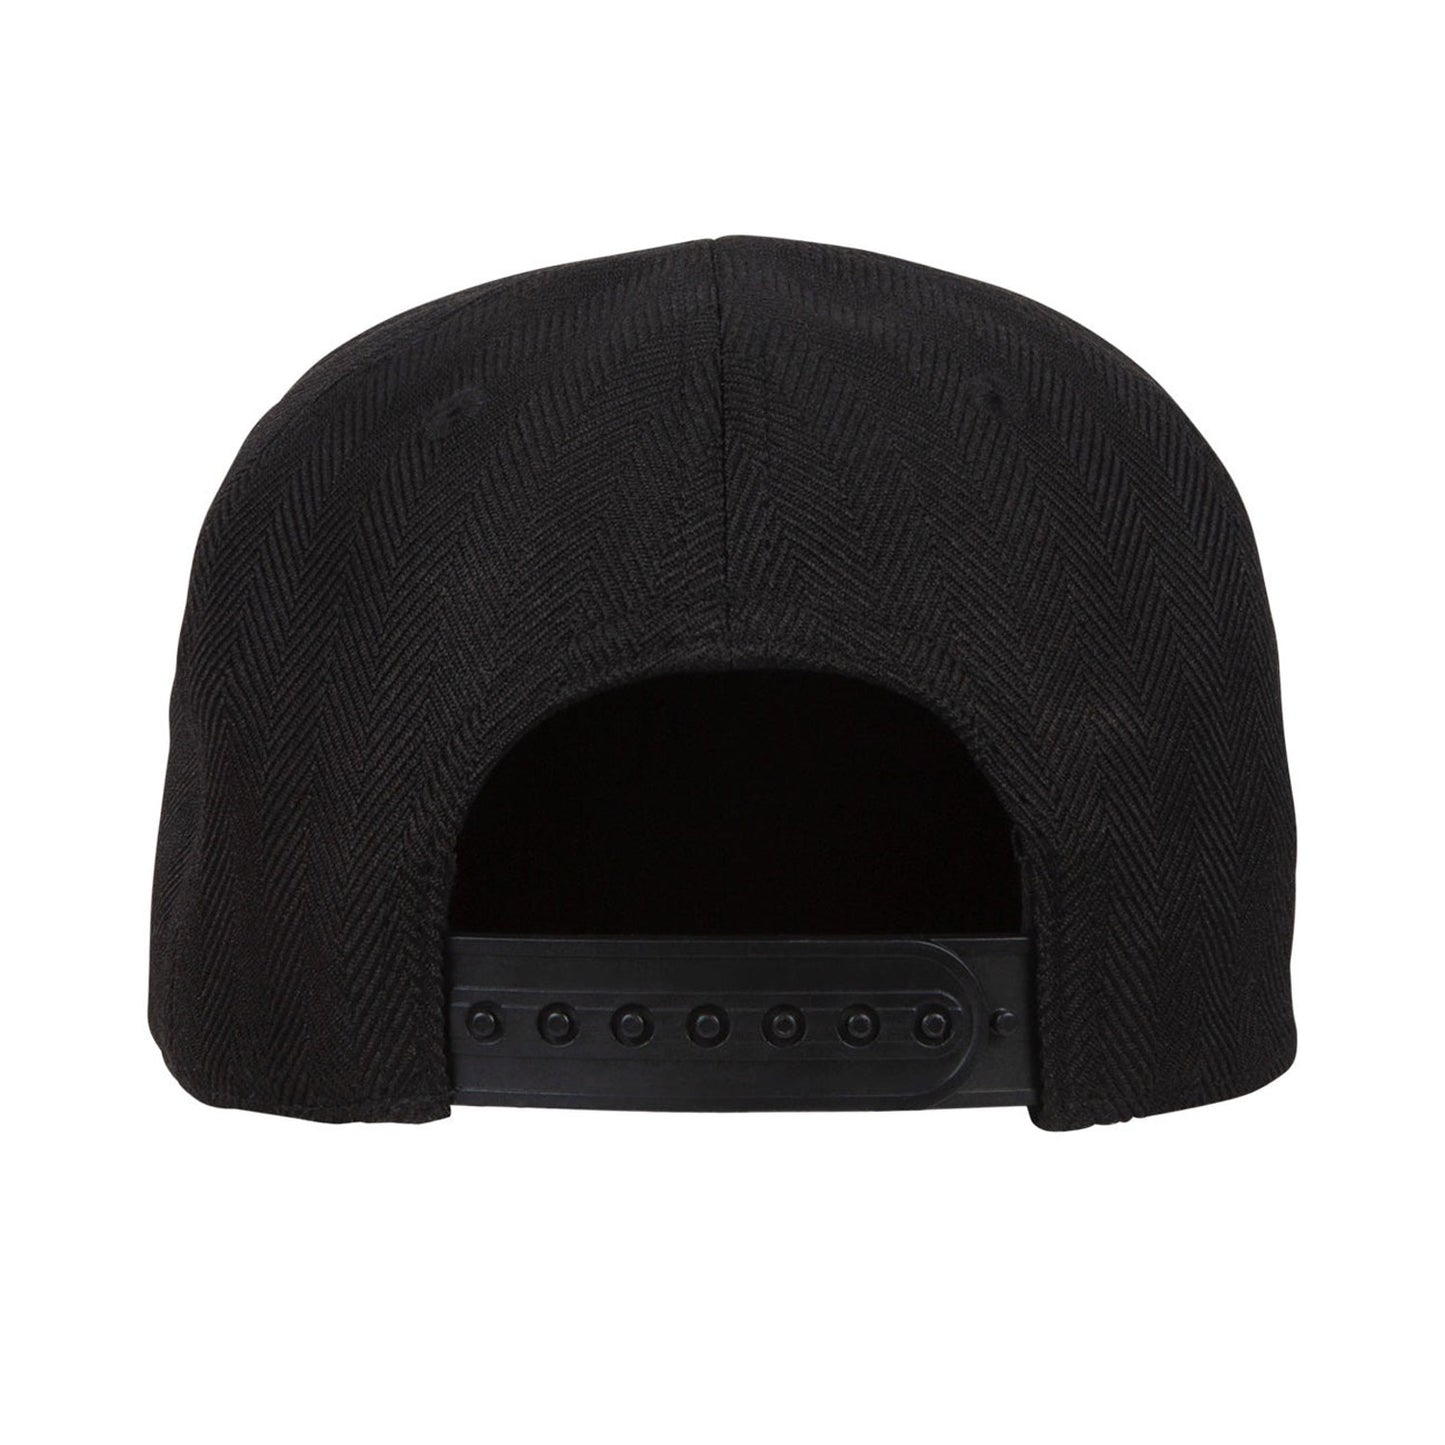 Binky Bro Sumatra Hat - Black